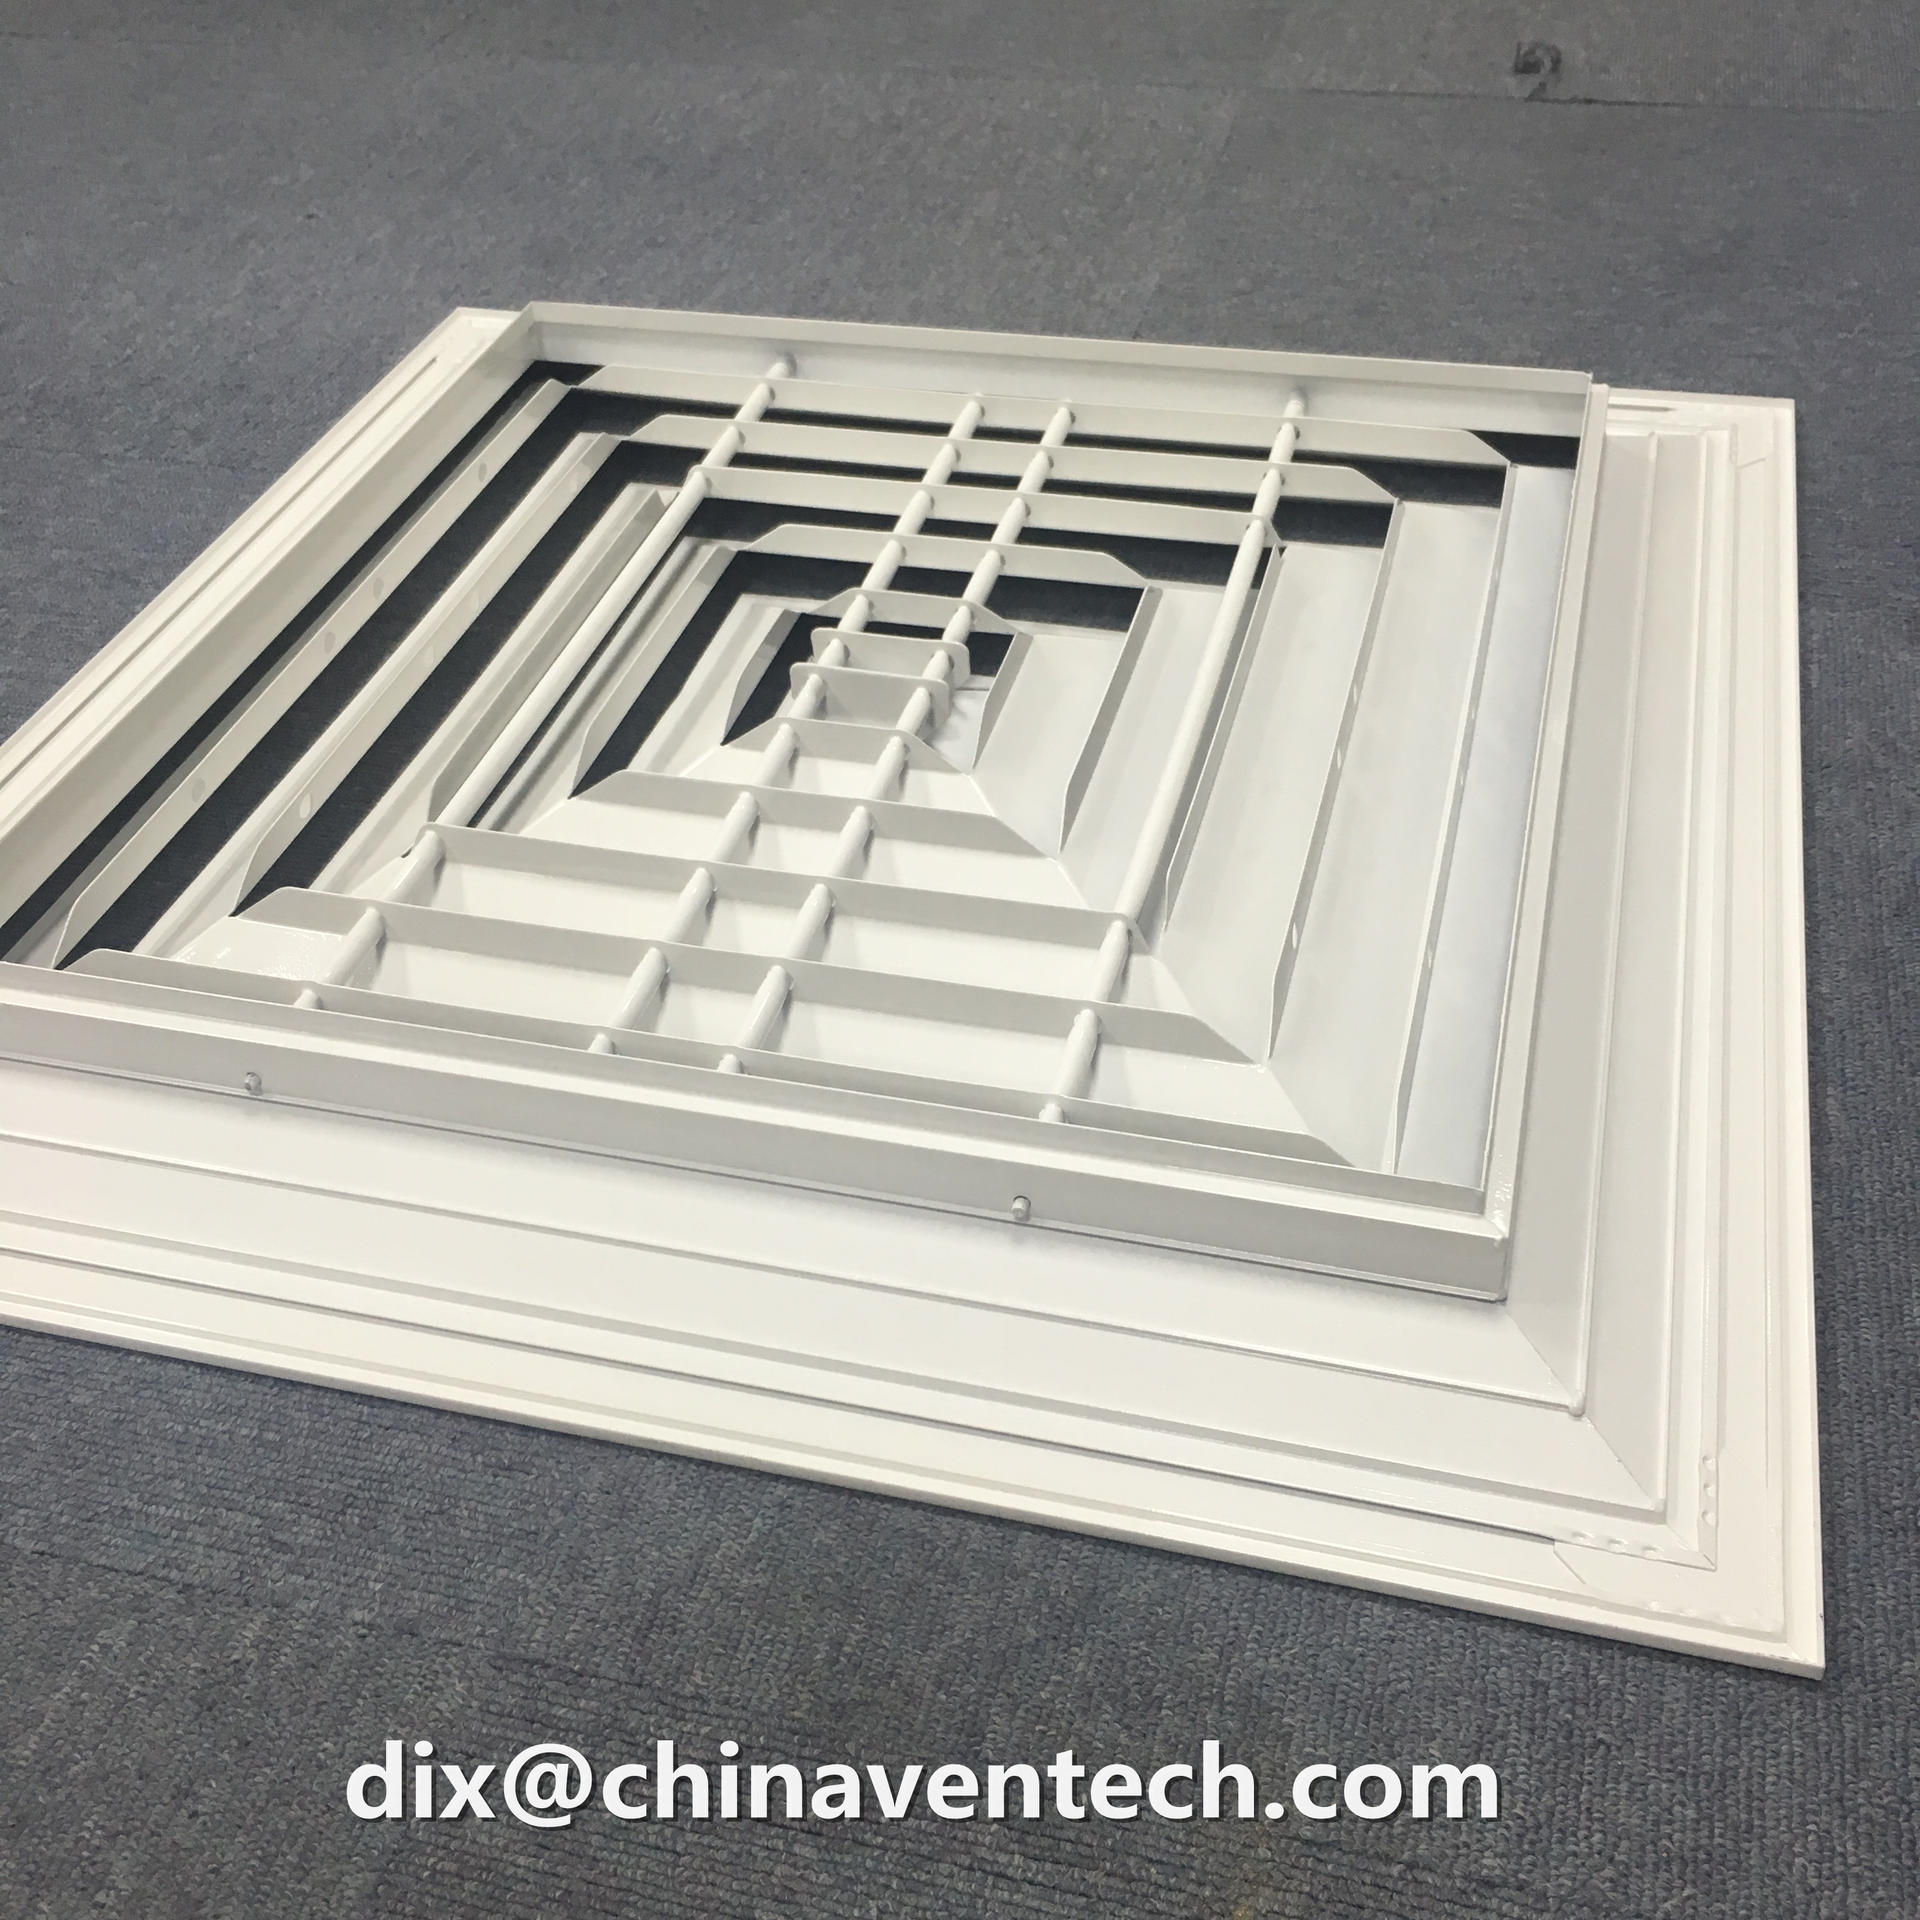 HVAC return air ventilation ceiling 4 way square diffuser